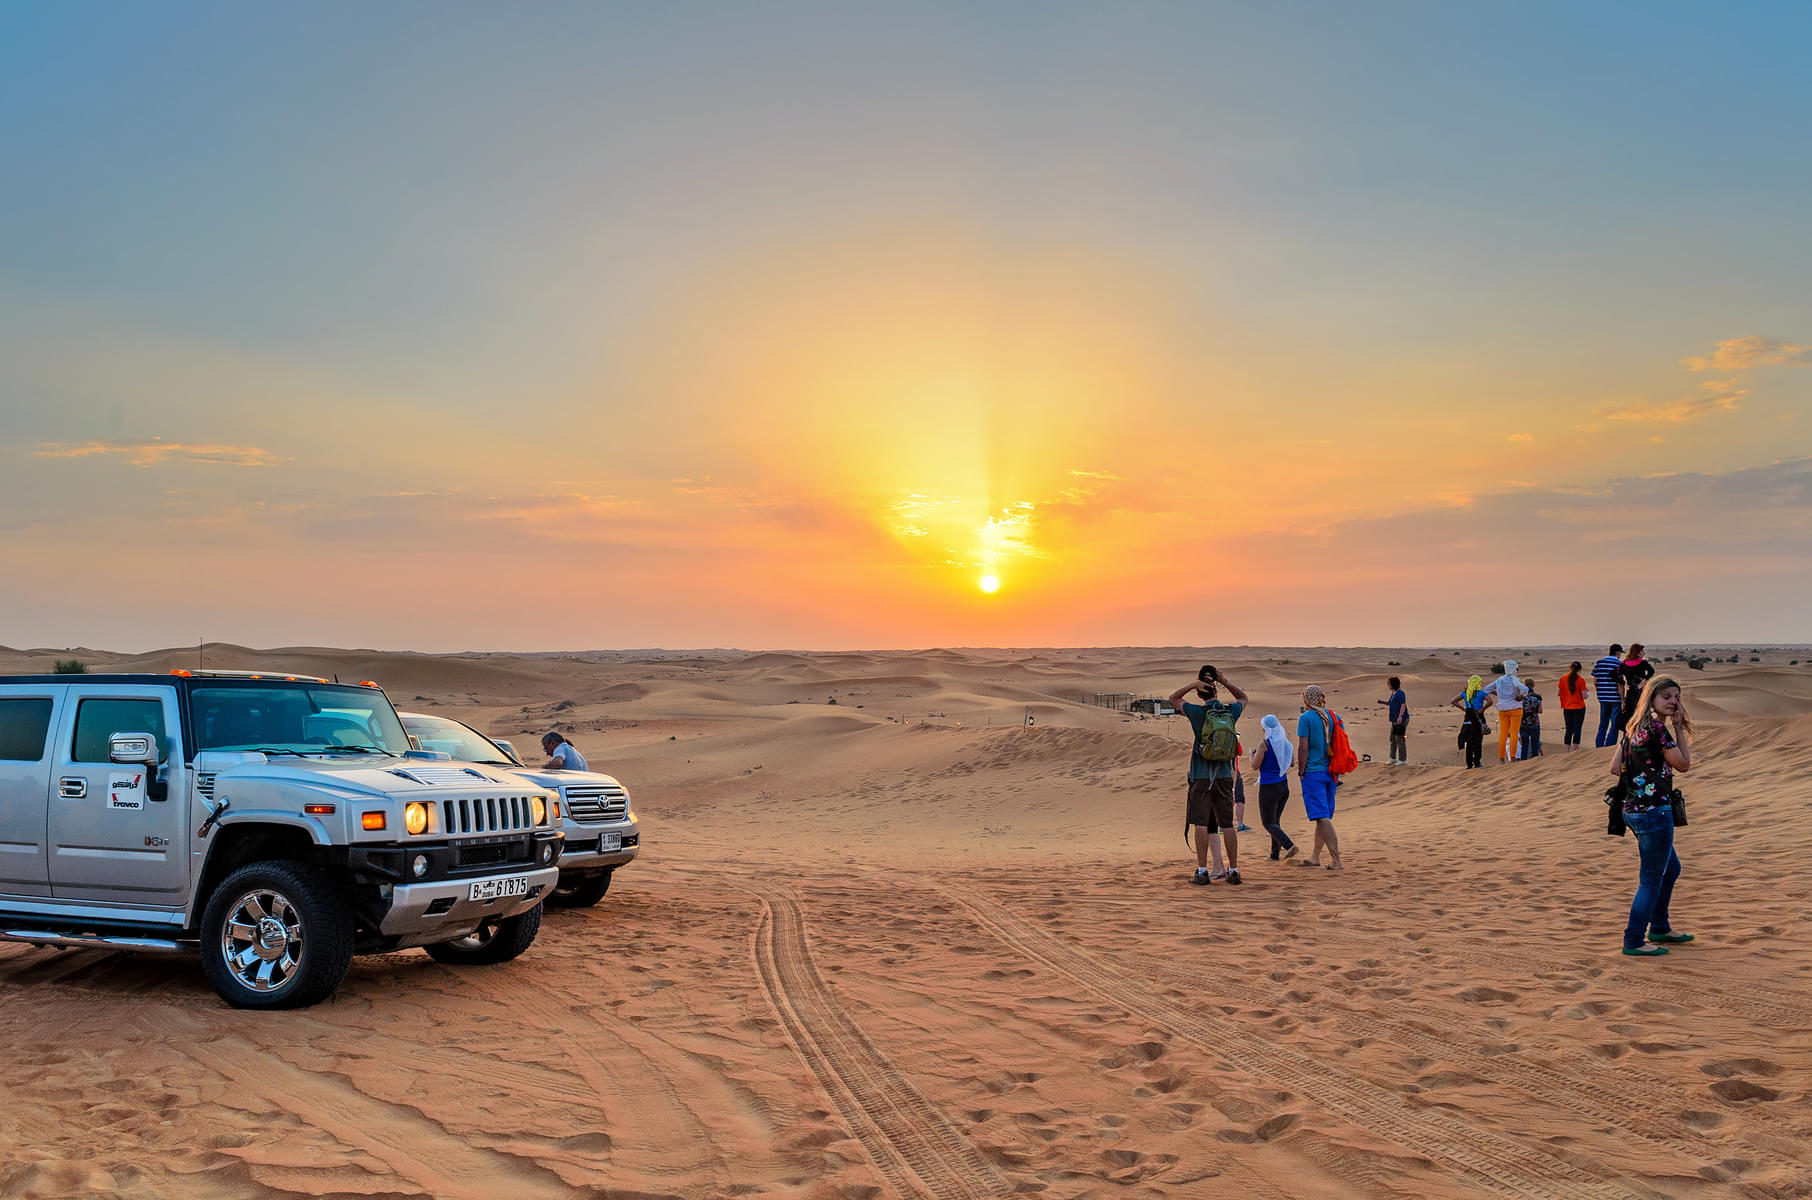 Enjoy a mesmerizing sunset over the desert horizon